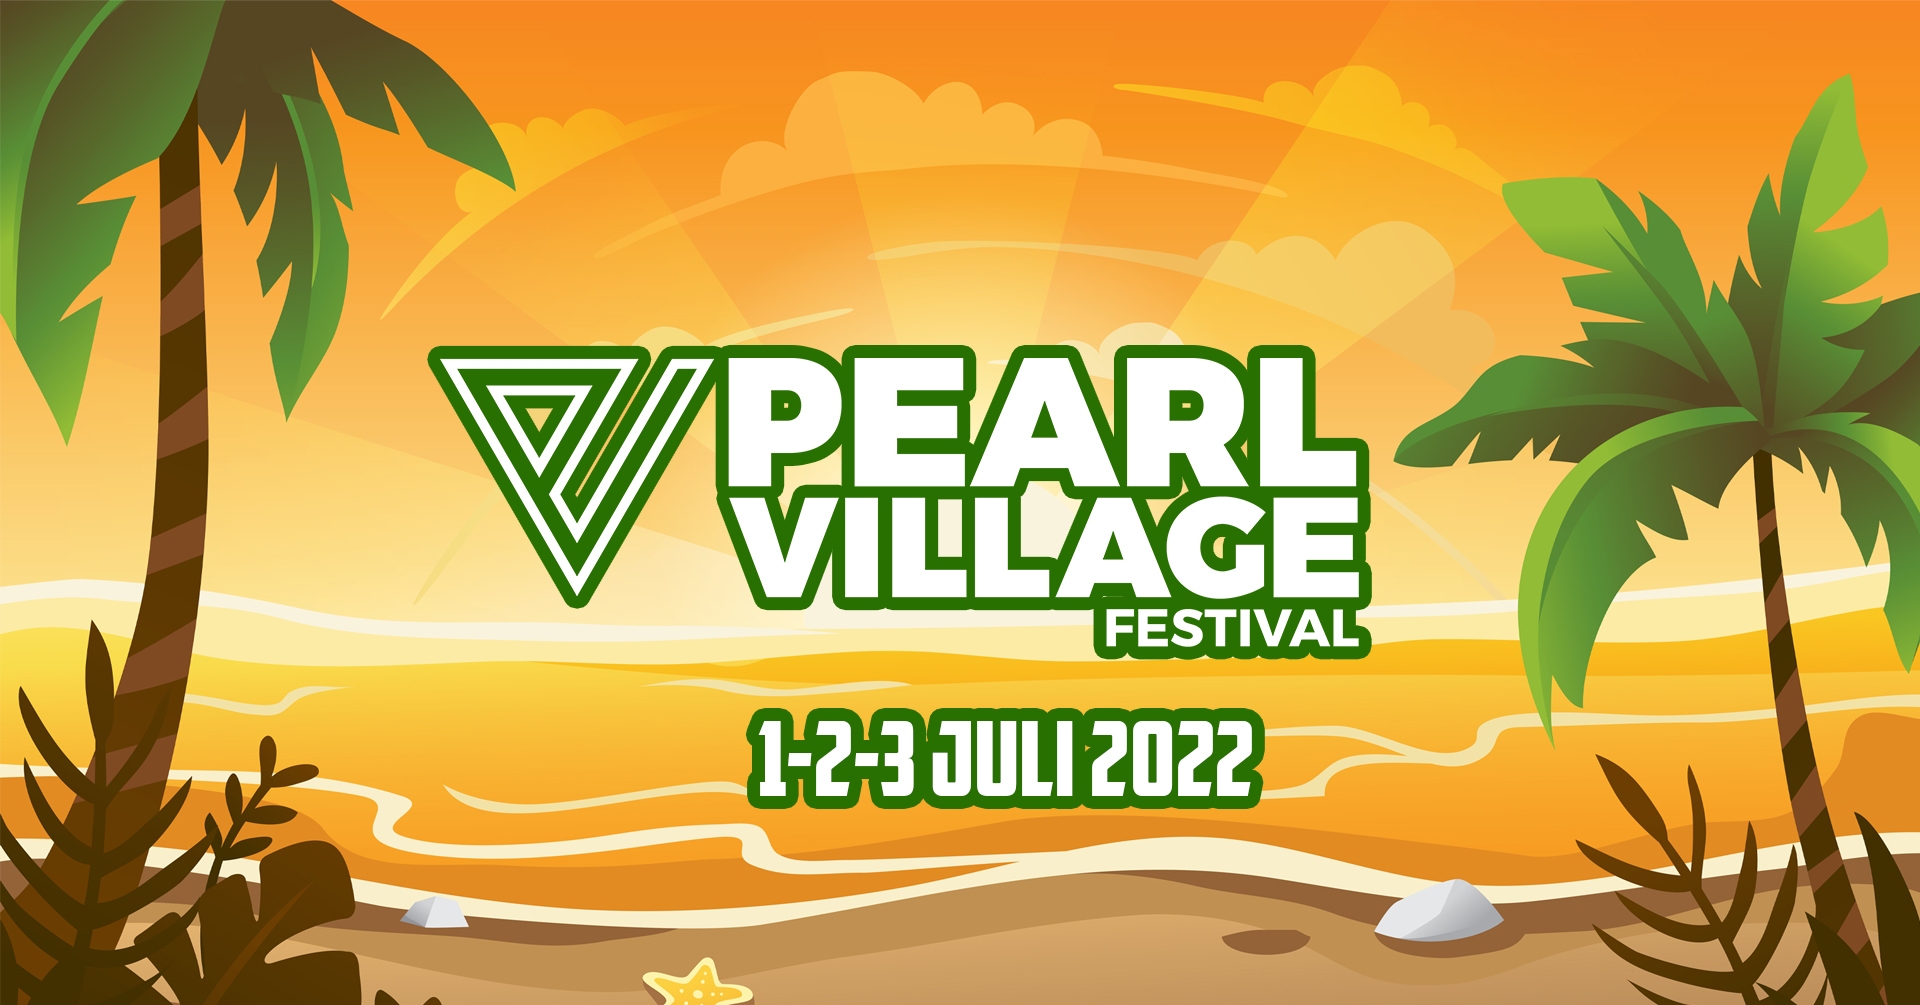 Pearl Village Festival & Weijdepop 2022